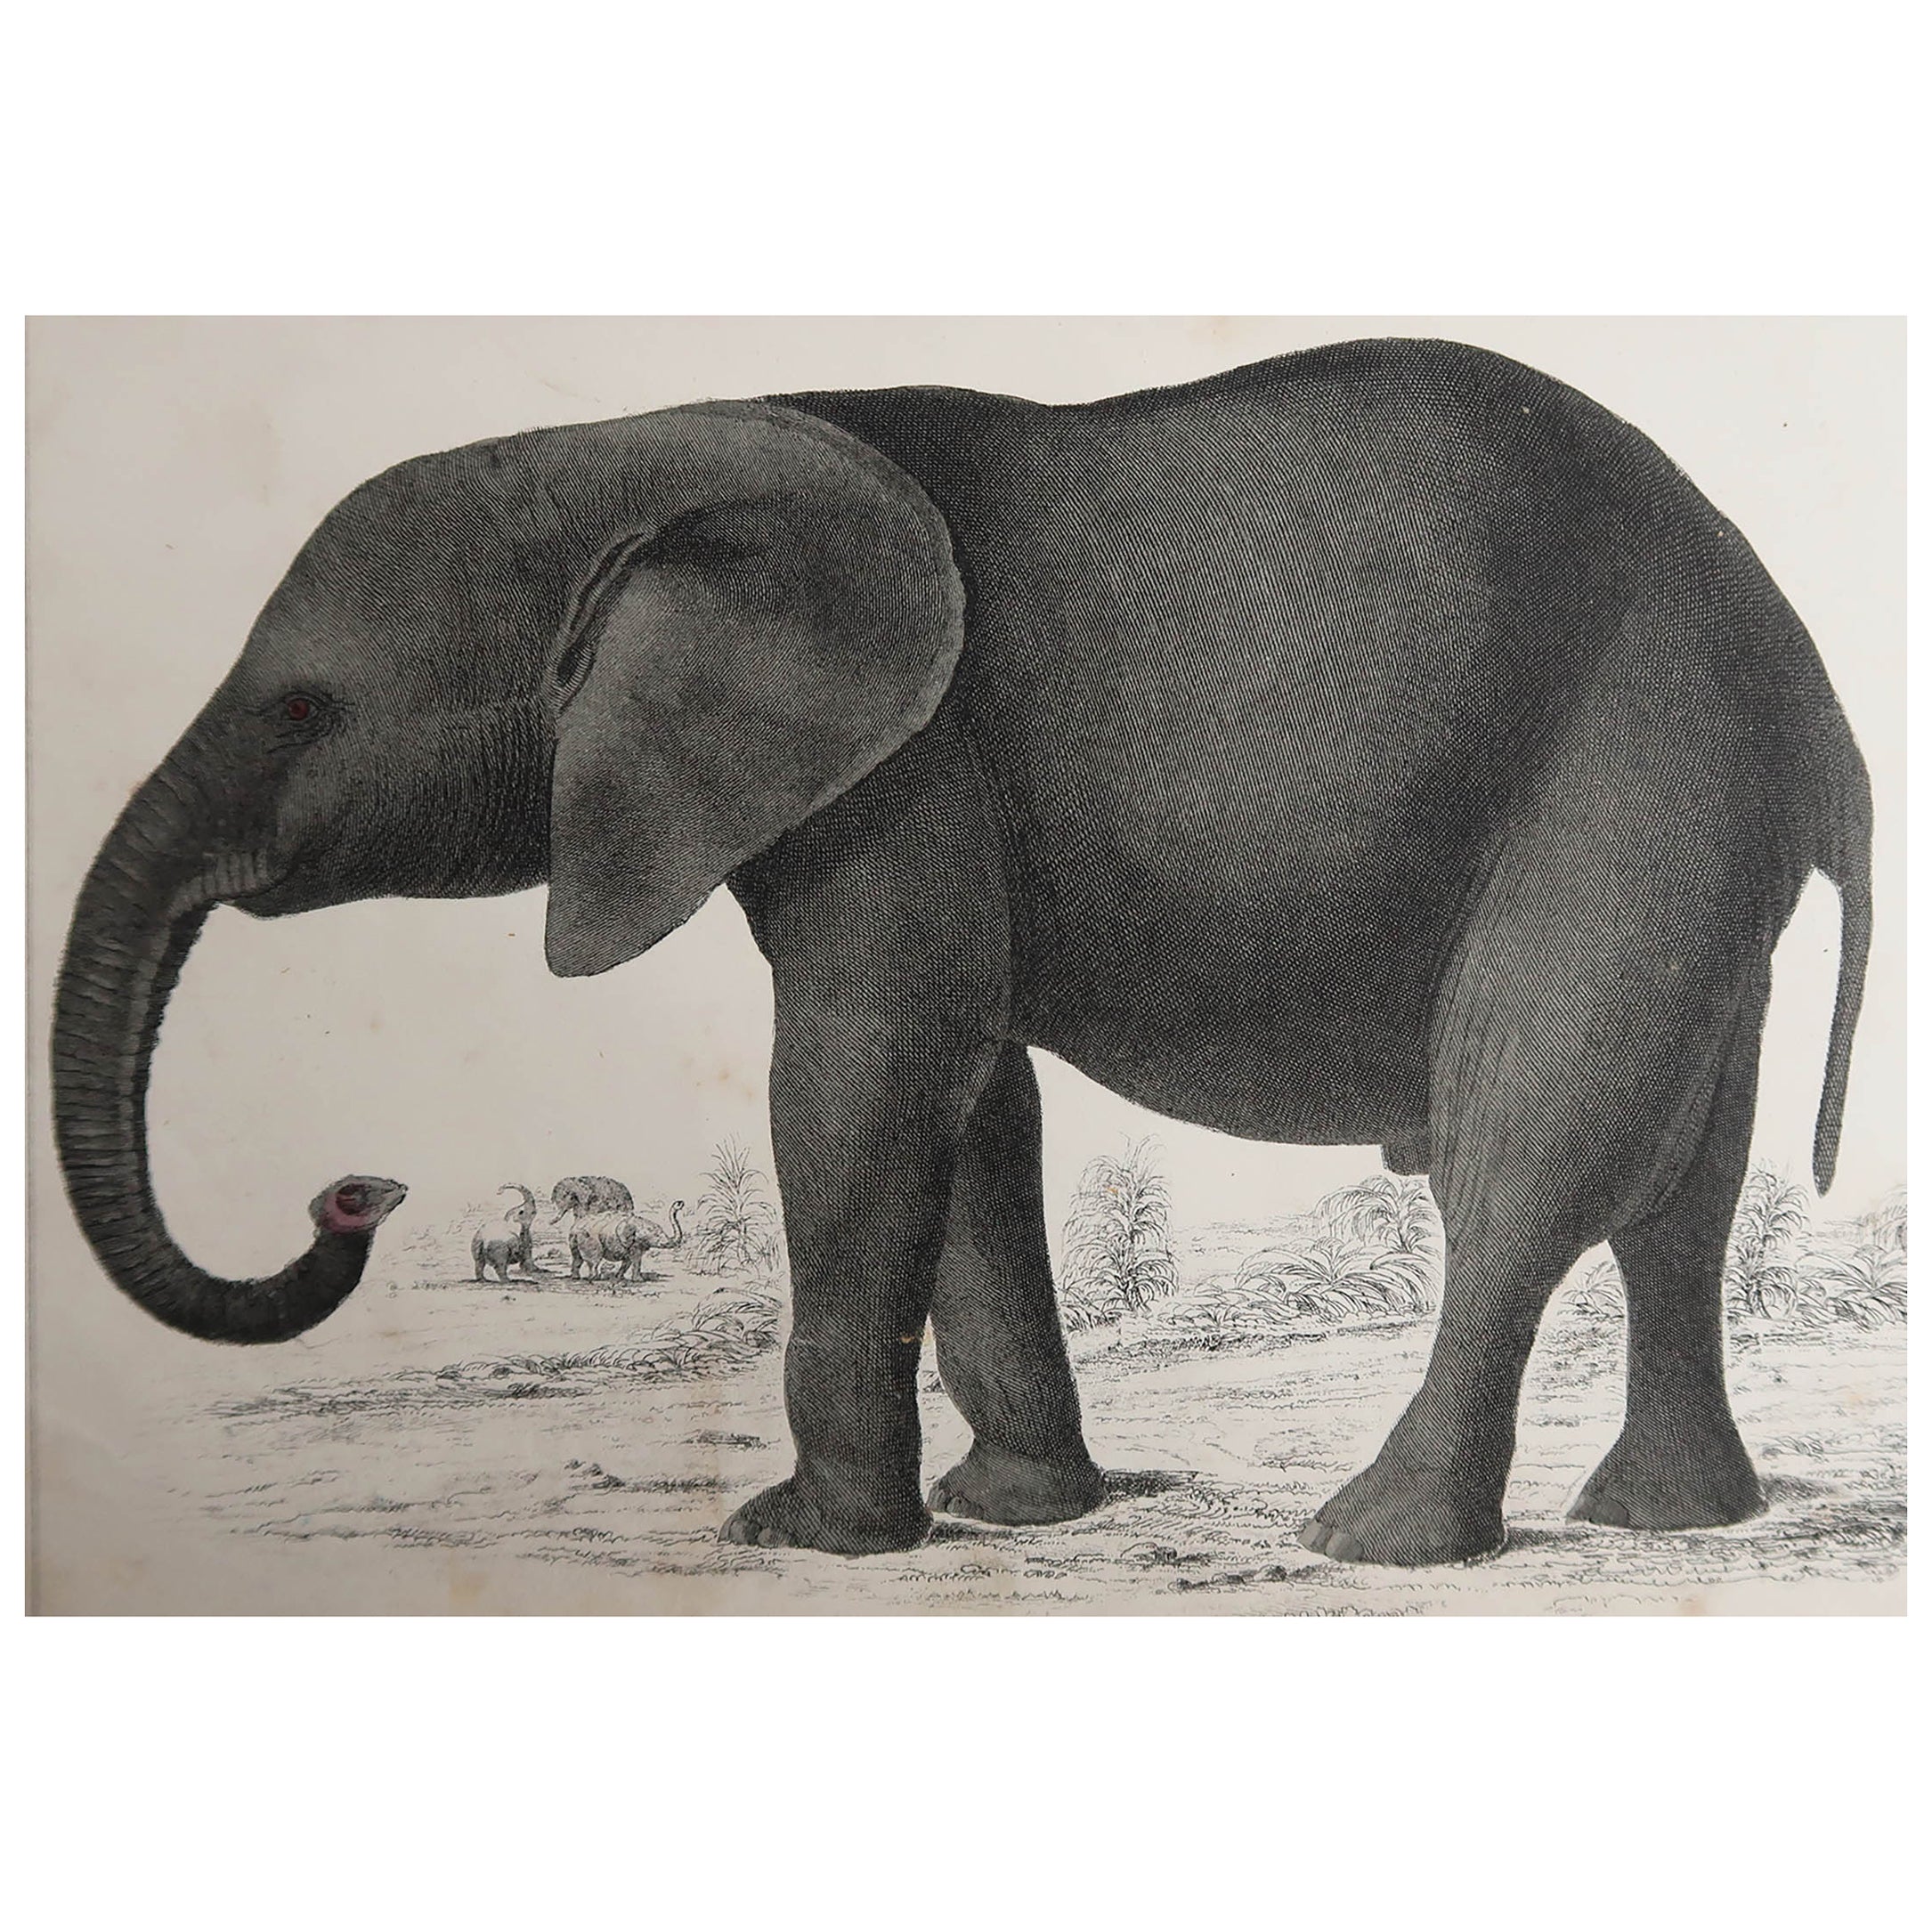 Stampa antica originale di un elefante, 1847, senza cornice